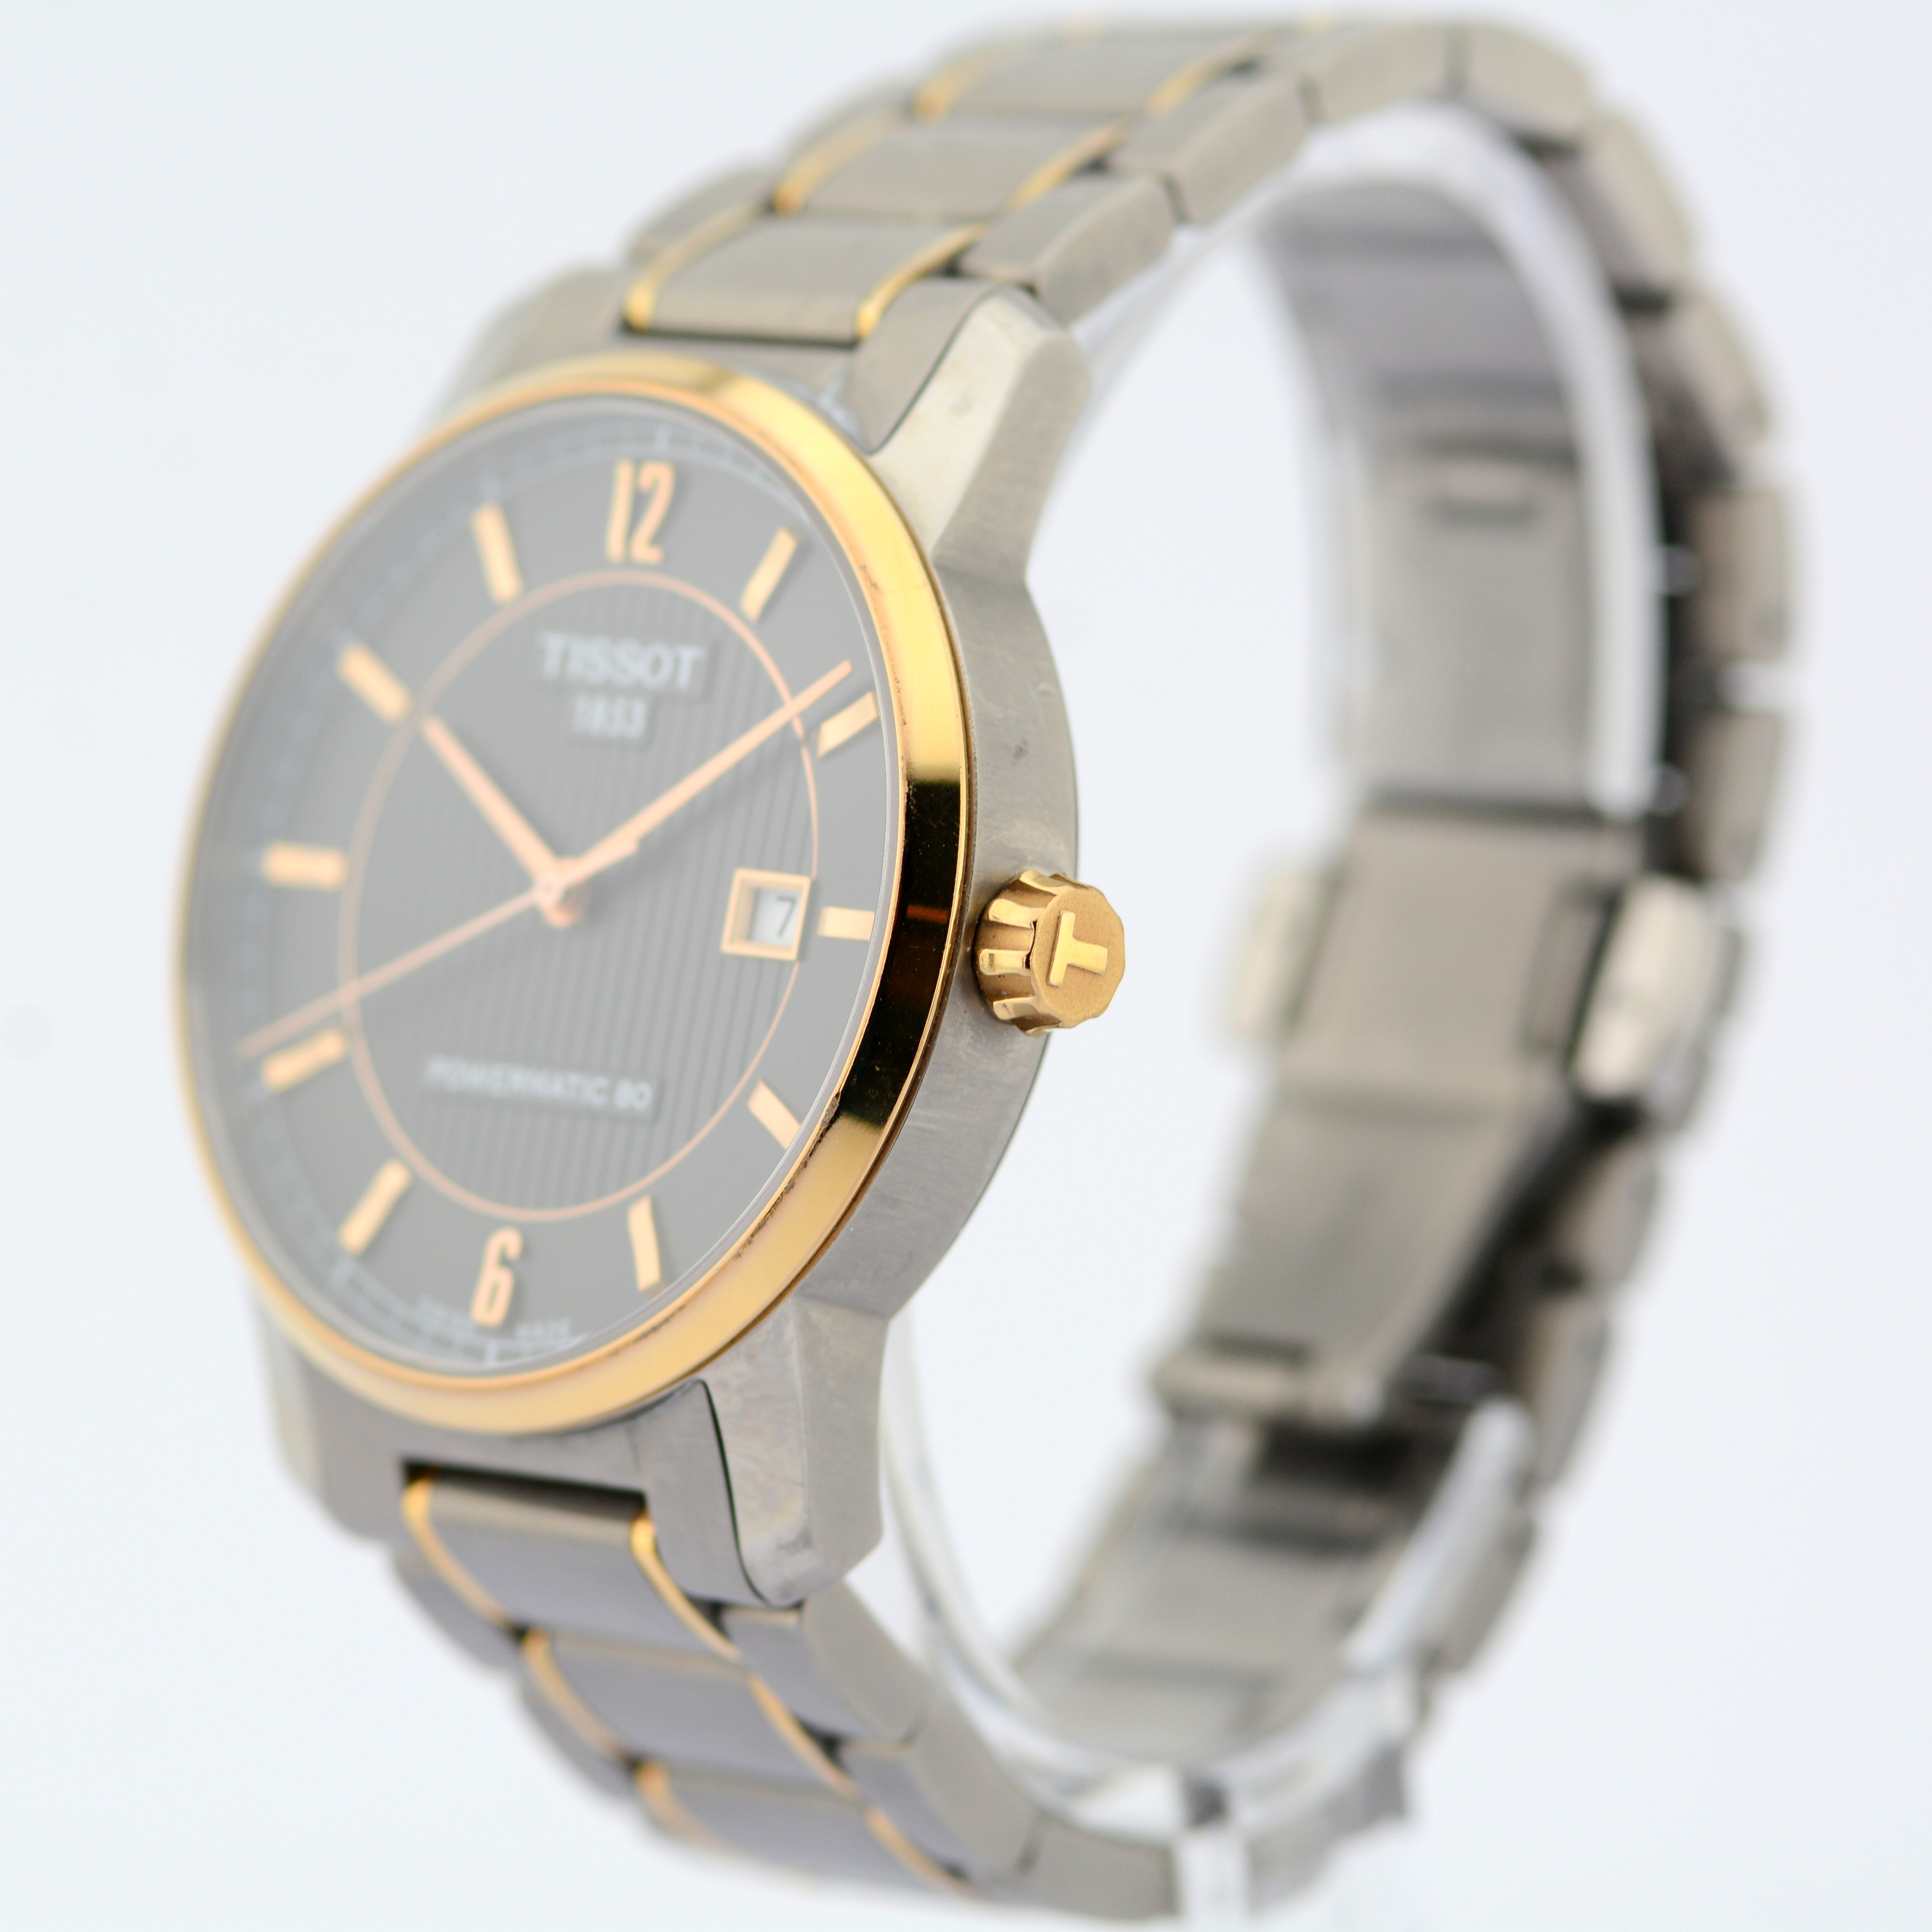 Tissot / Powermatic 80 Date - Automatic - Titanium - Gentlmen's Steel Wrist Watch - Image 3 of 9